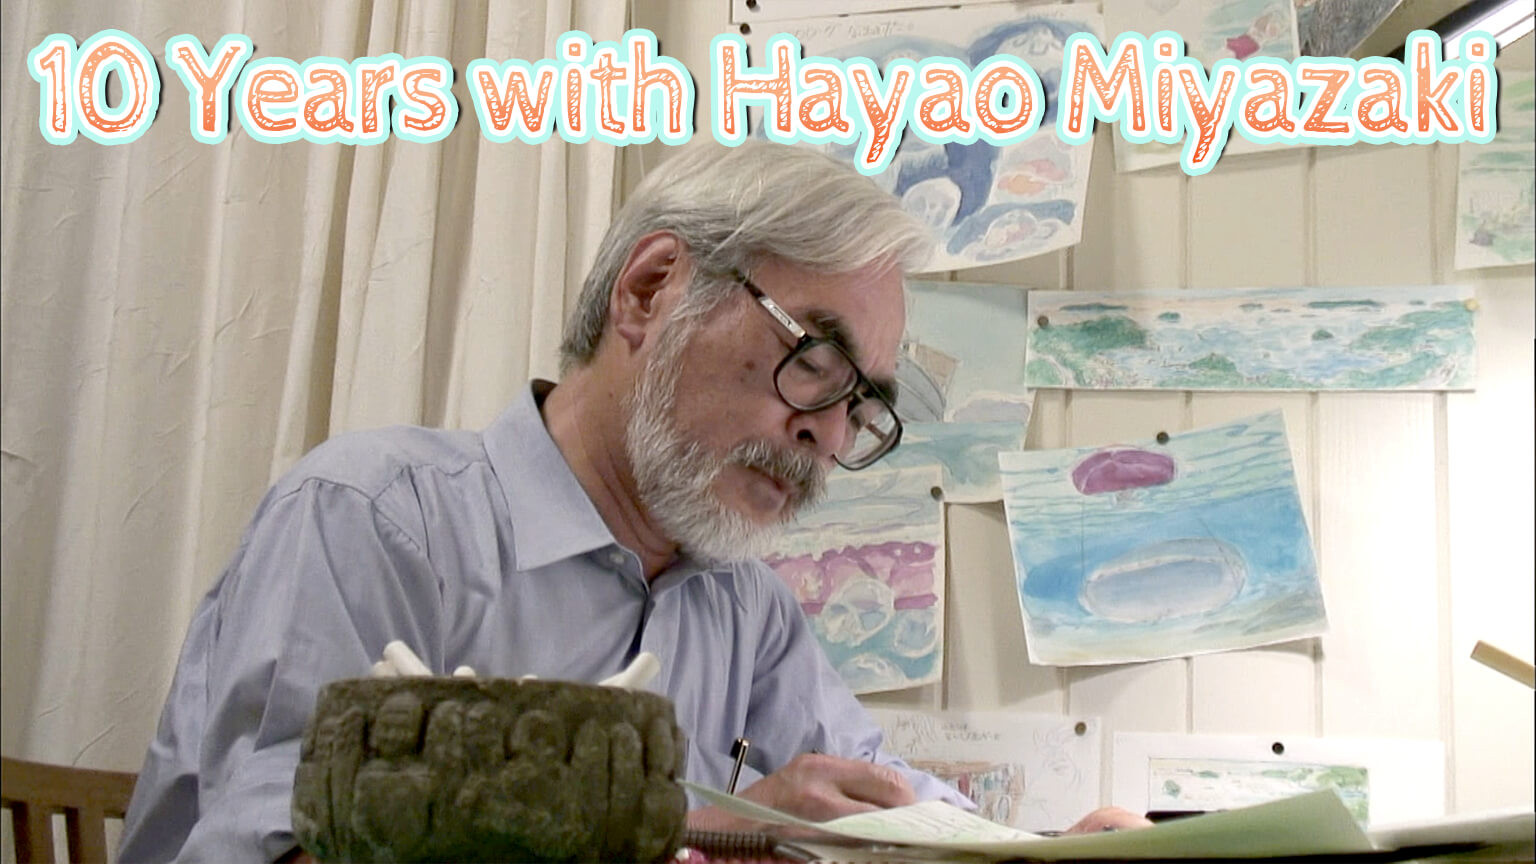 10 Tahun Bersama Hayao Miyazaki